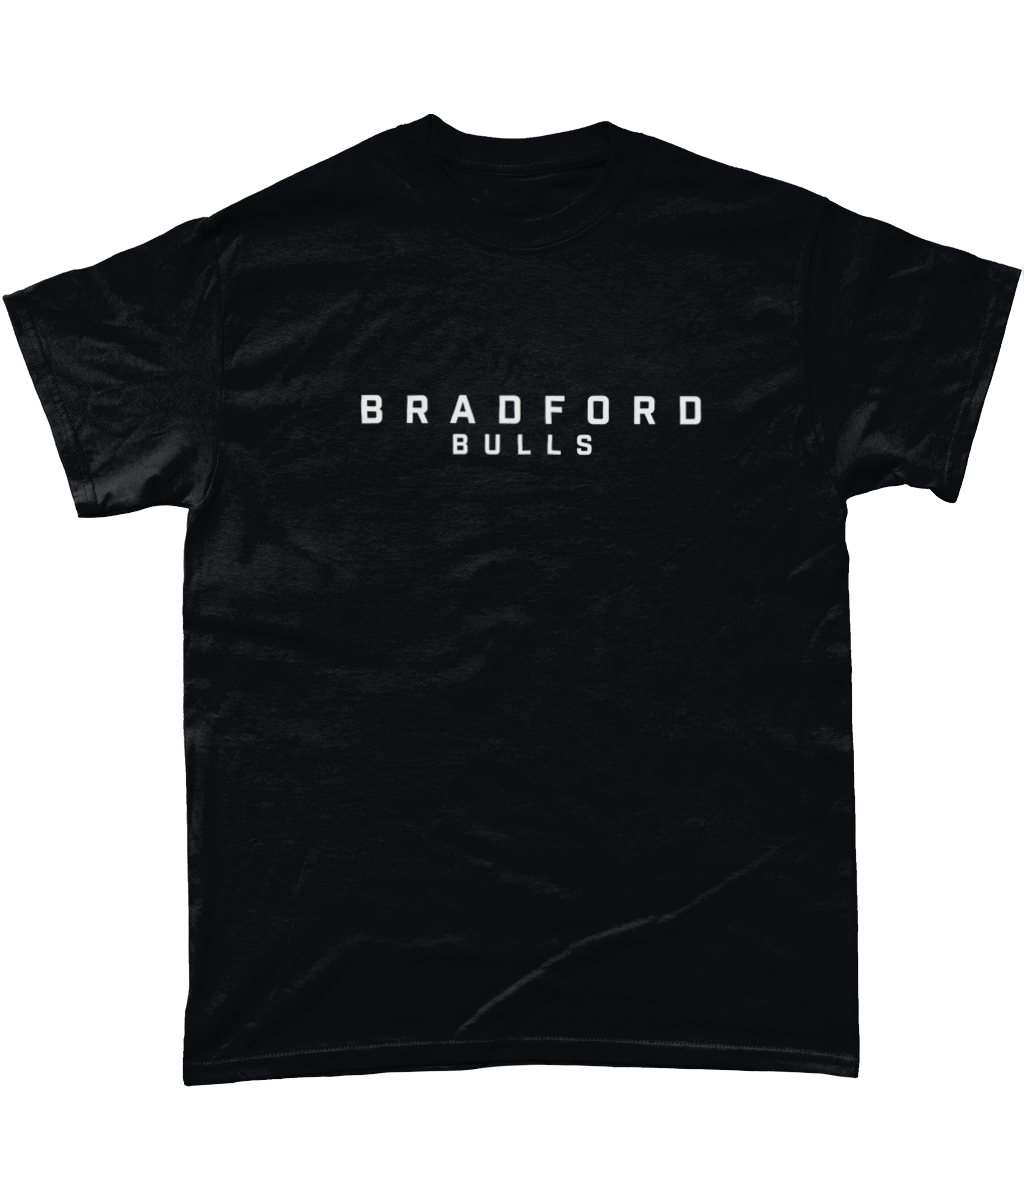 Bradford Bulls Text T-Shirt in Black